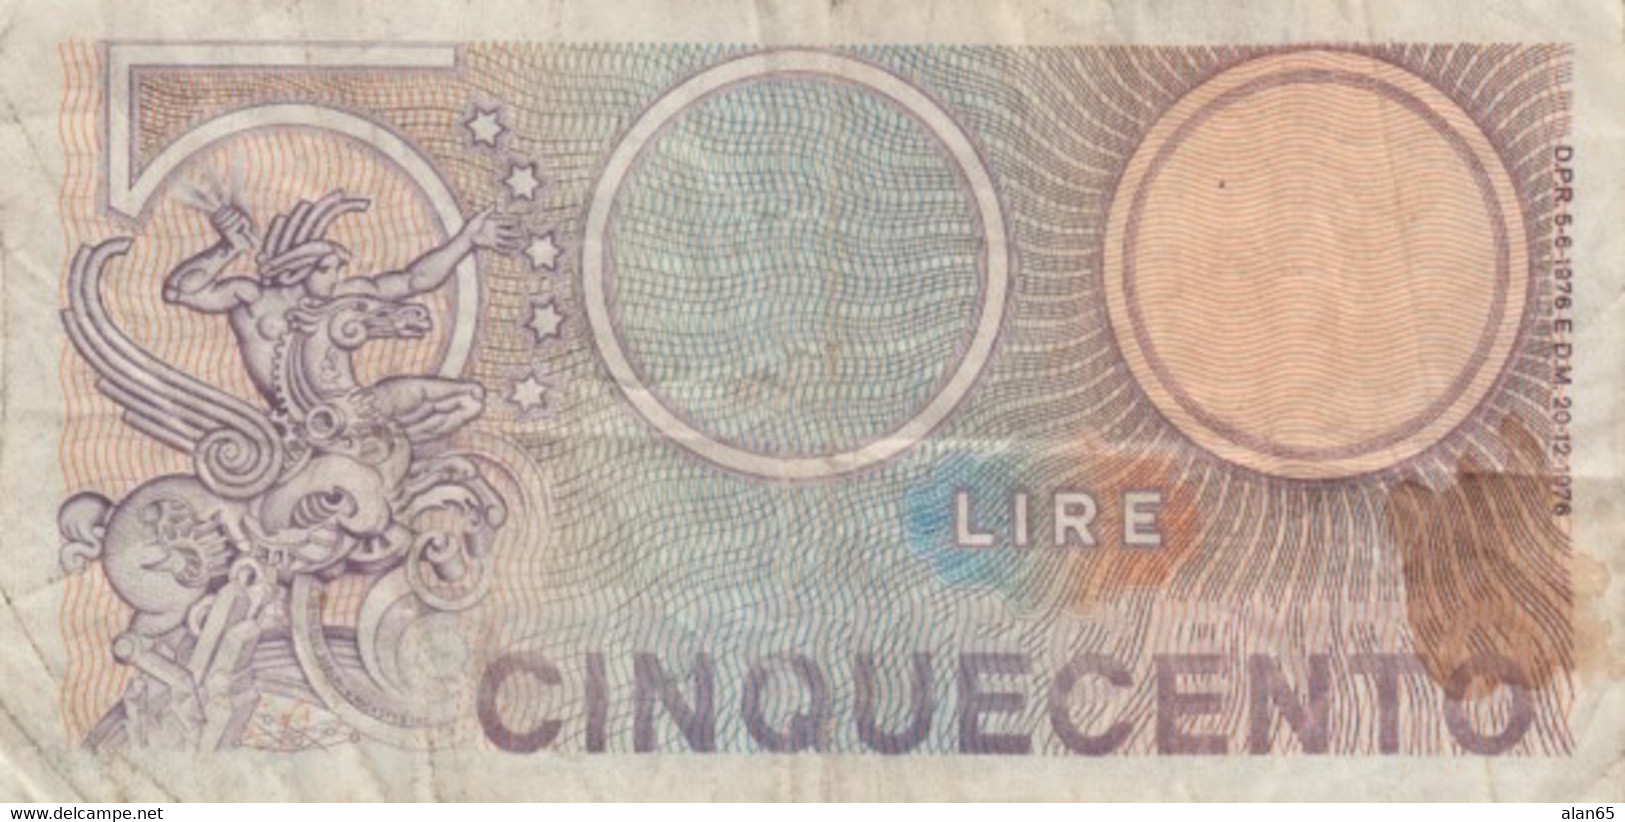 Italy #95, 500 Lire 1976 Banknote - 500 Lire